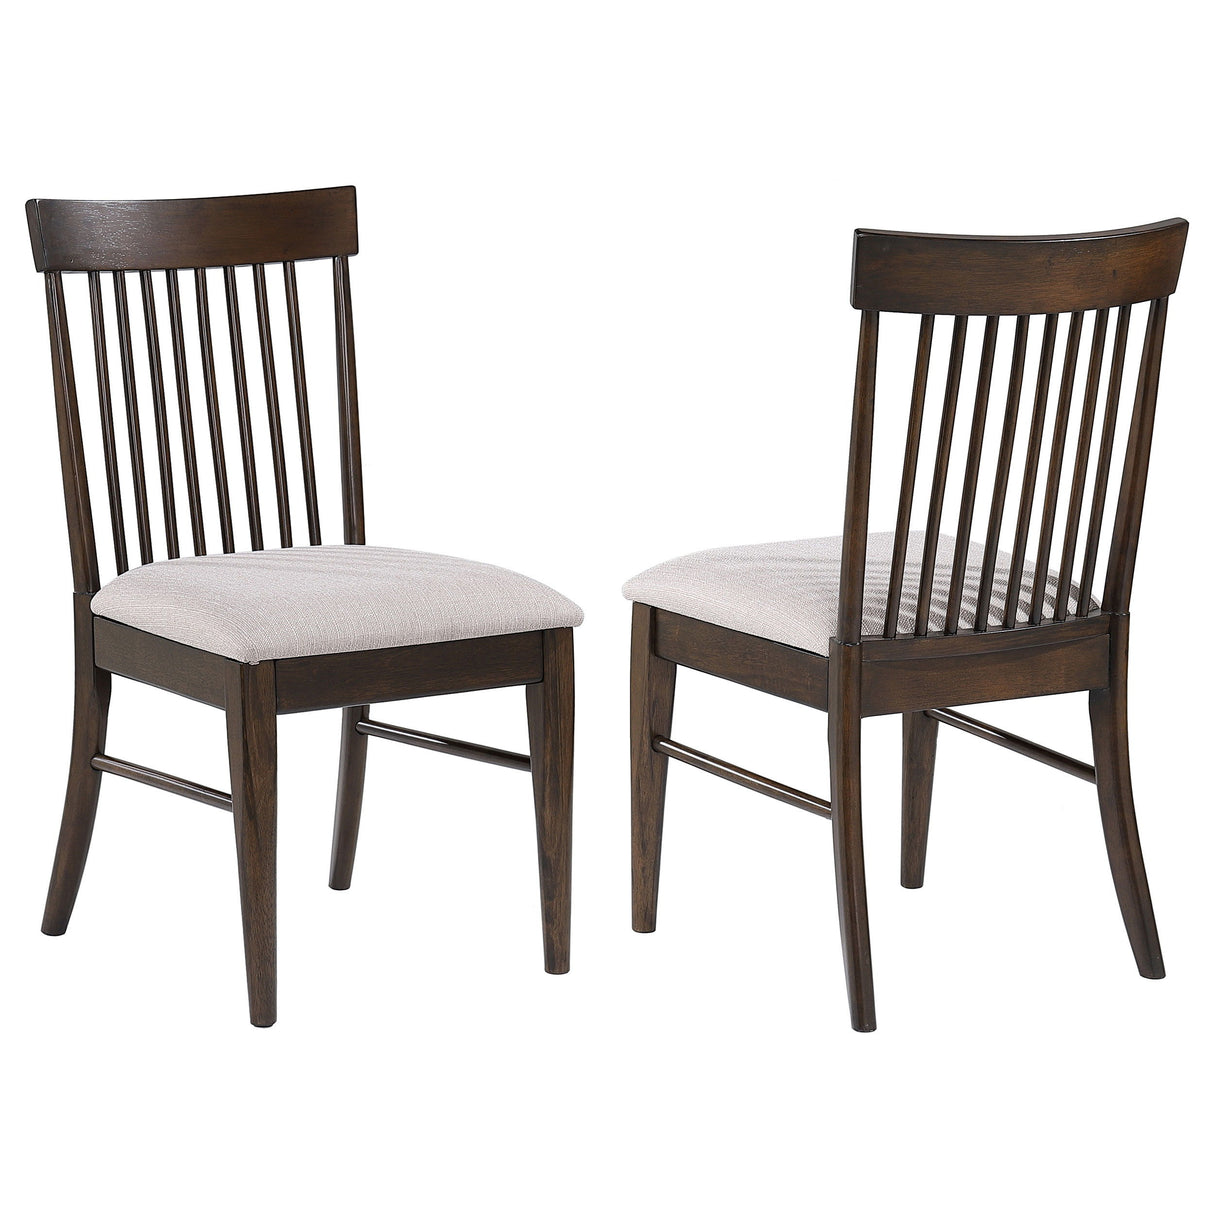 Everton - Wood Dining Side Chair (Set of 2) - Dark Walnut